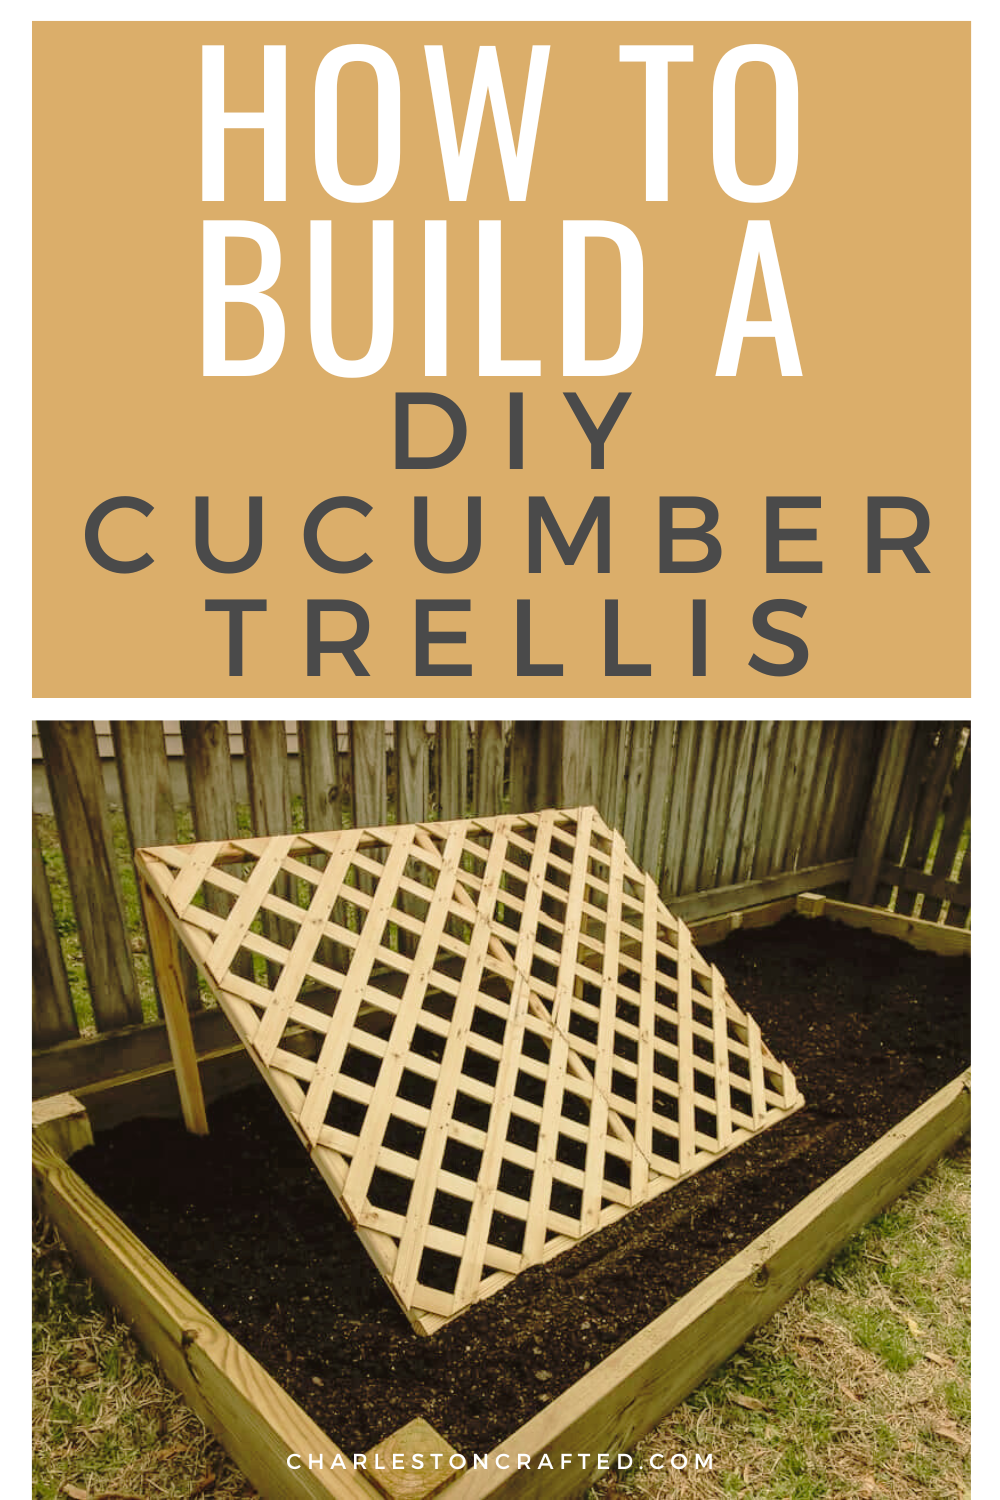 DIY Raised Cucumber Garden with a Trellis